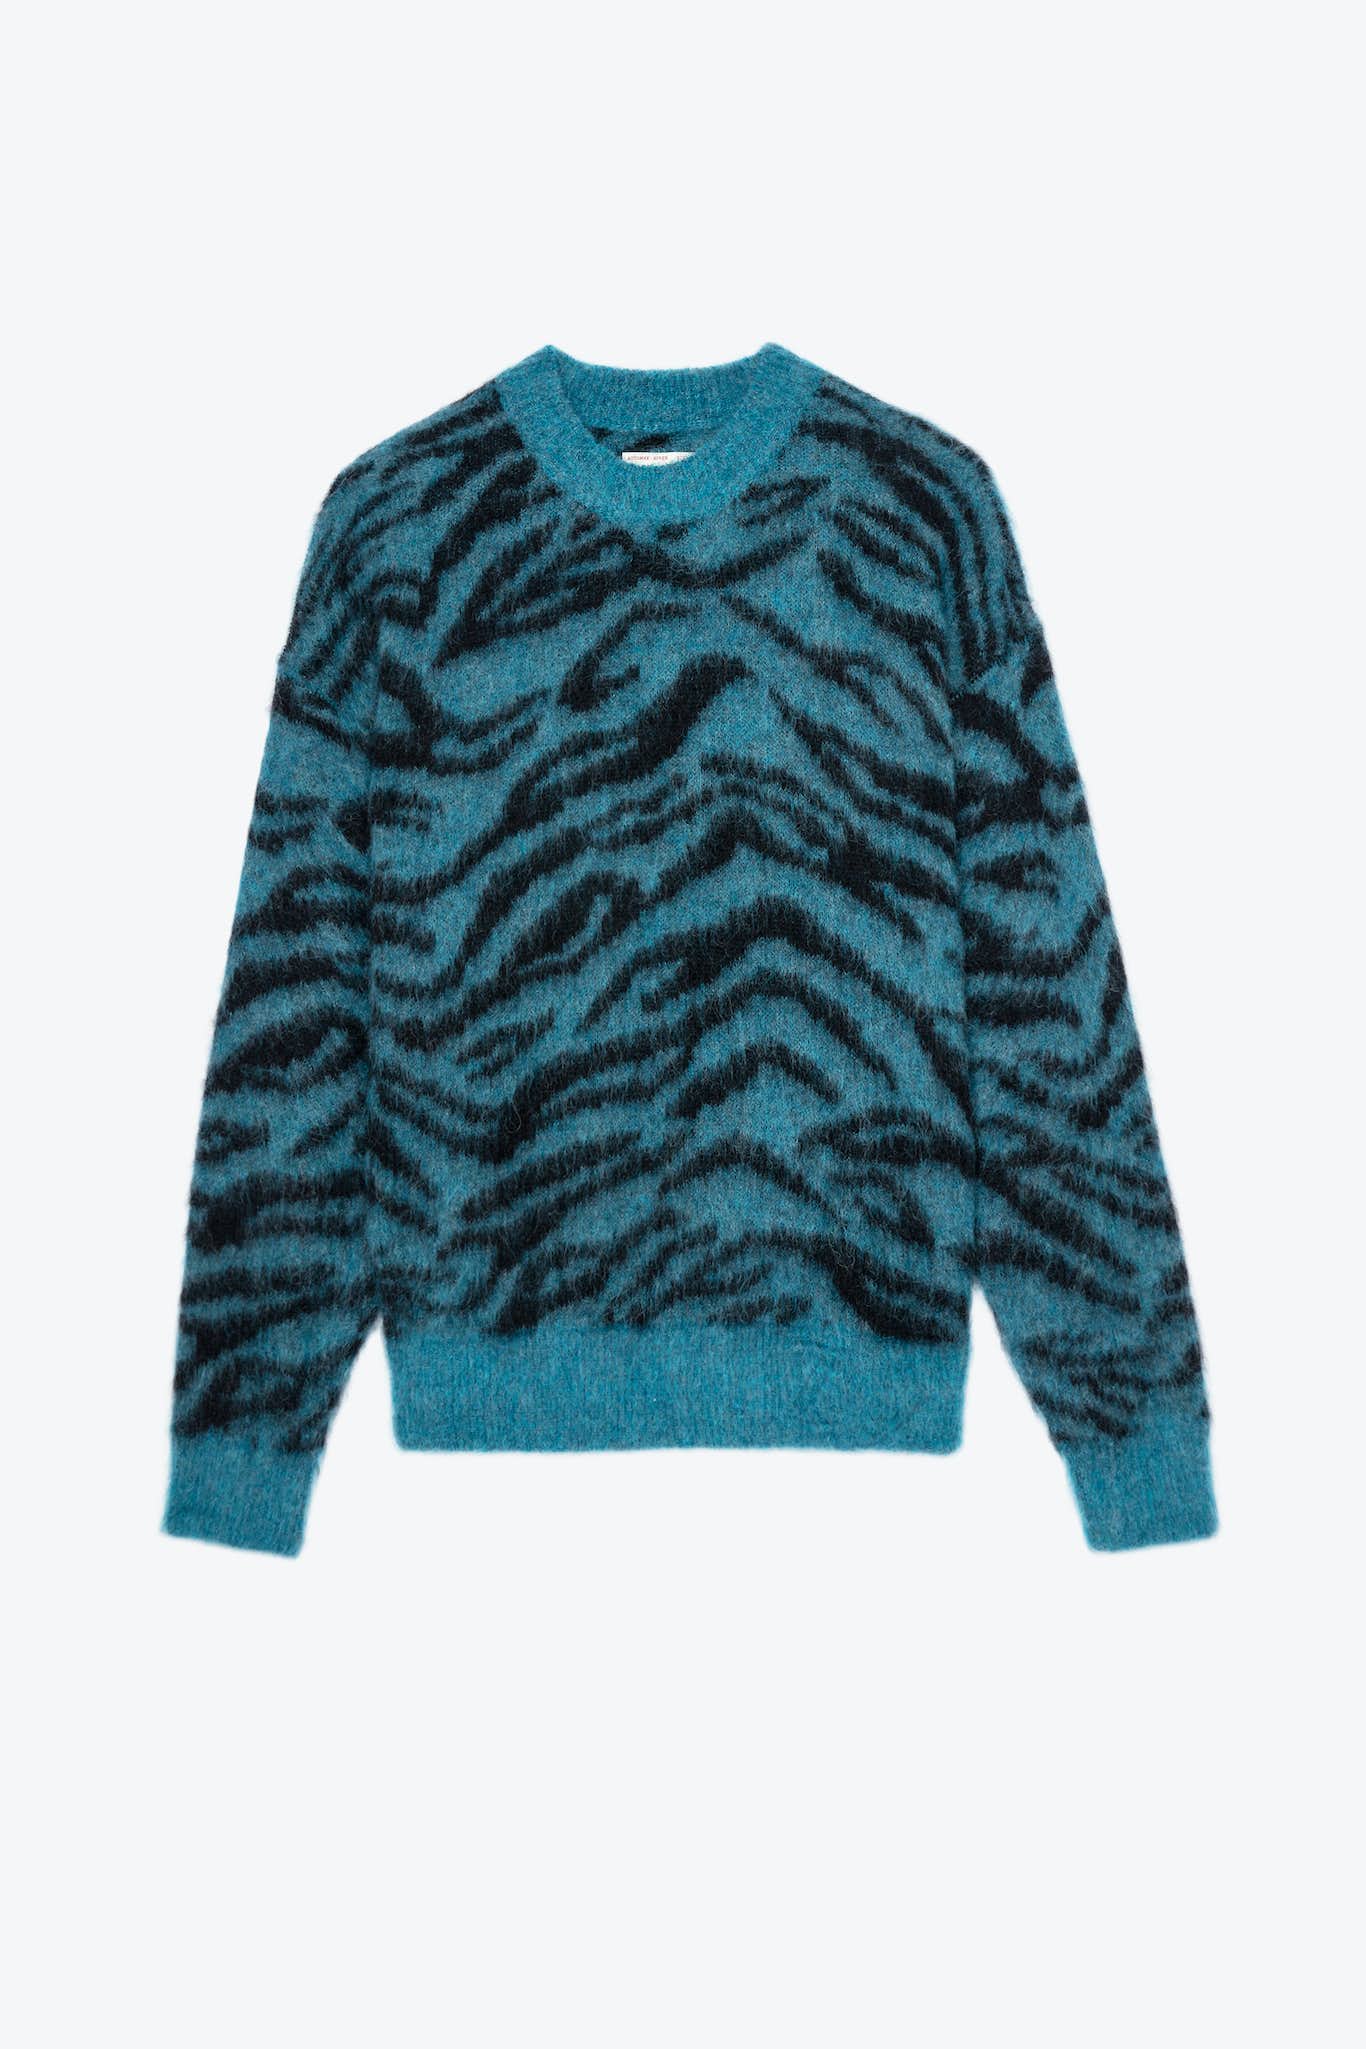 Gestrickter Pullover Rita Tiger - Blau gemustert